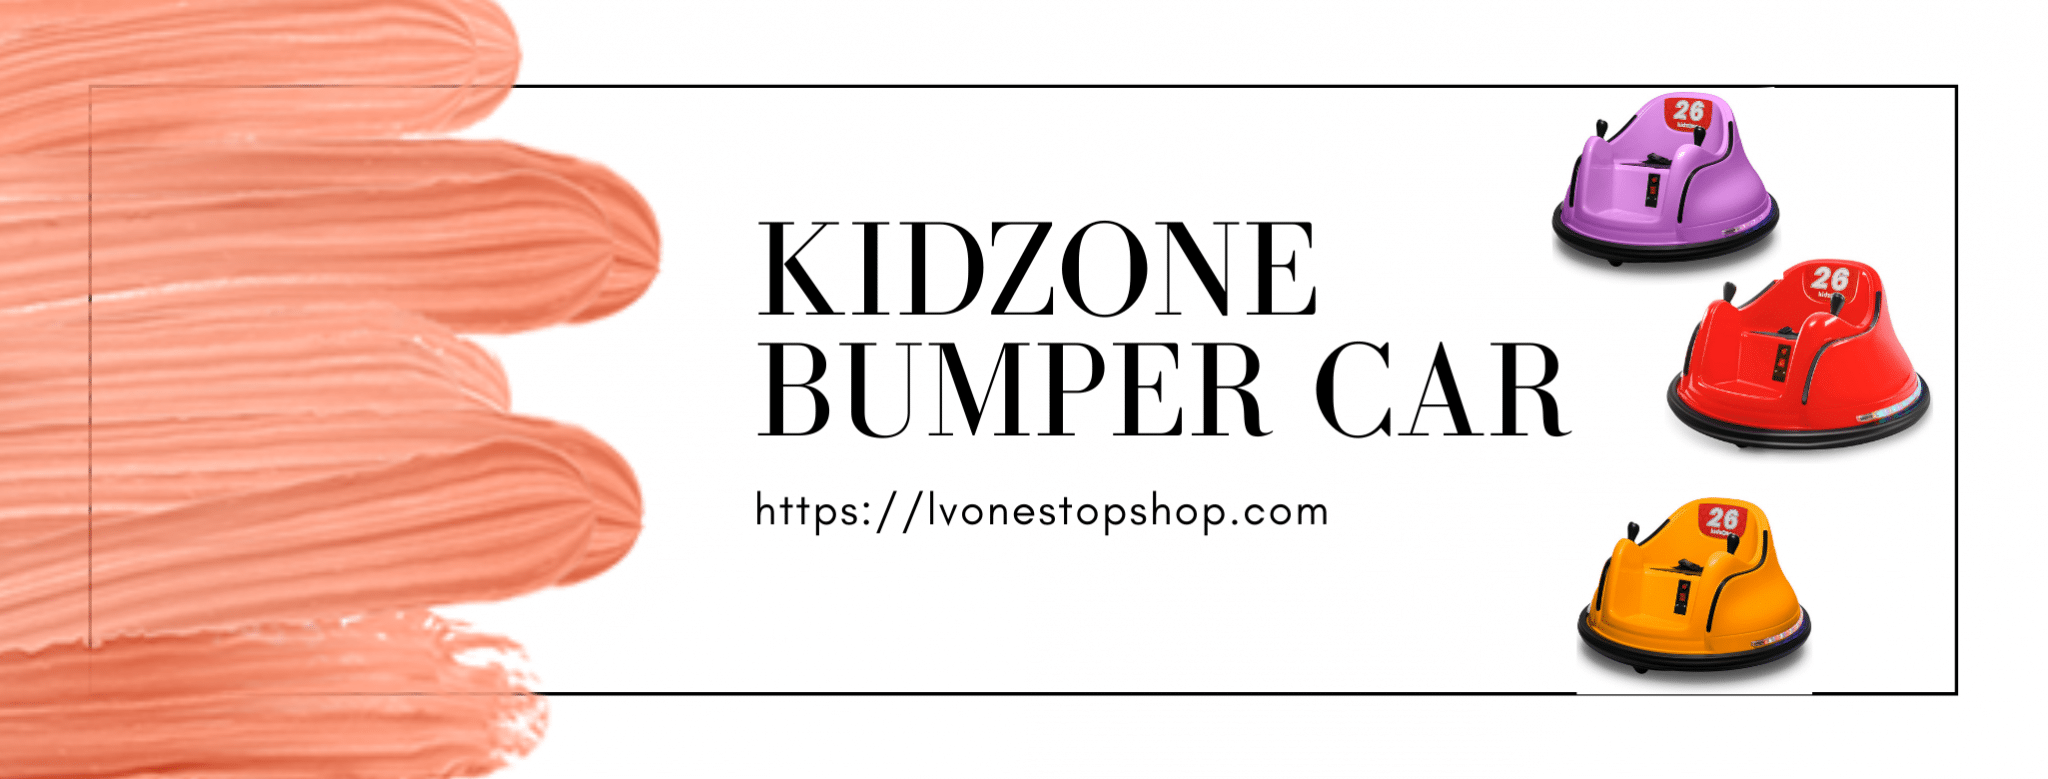 Kidzone Bumper Car for sale